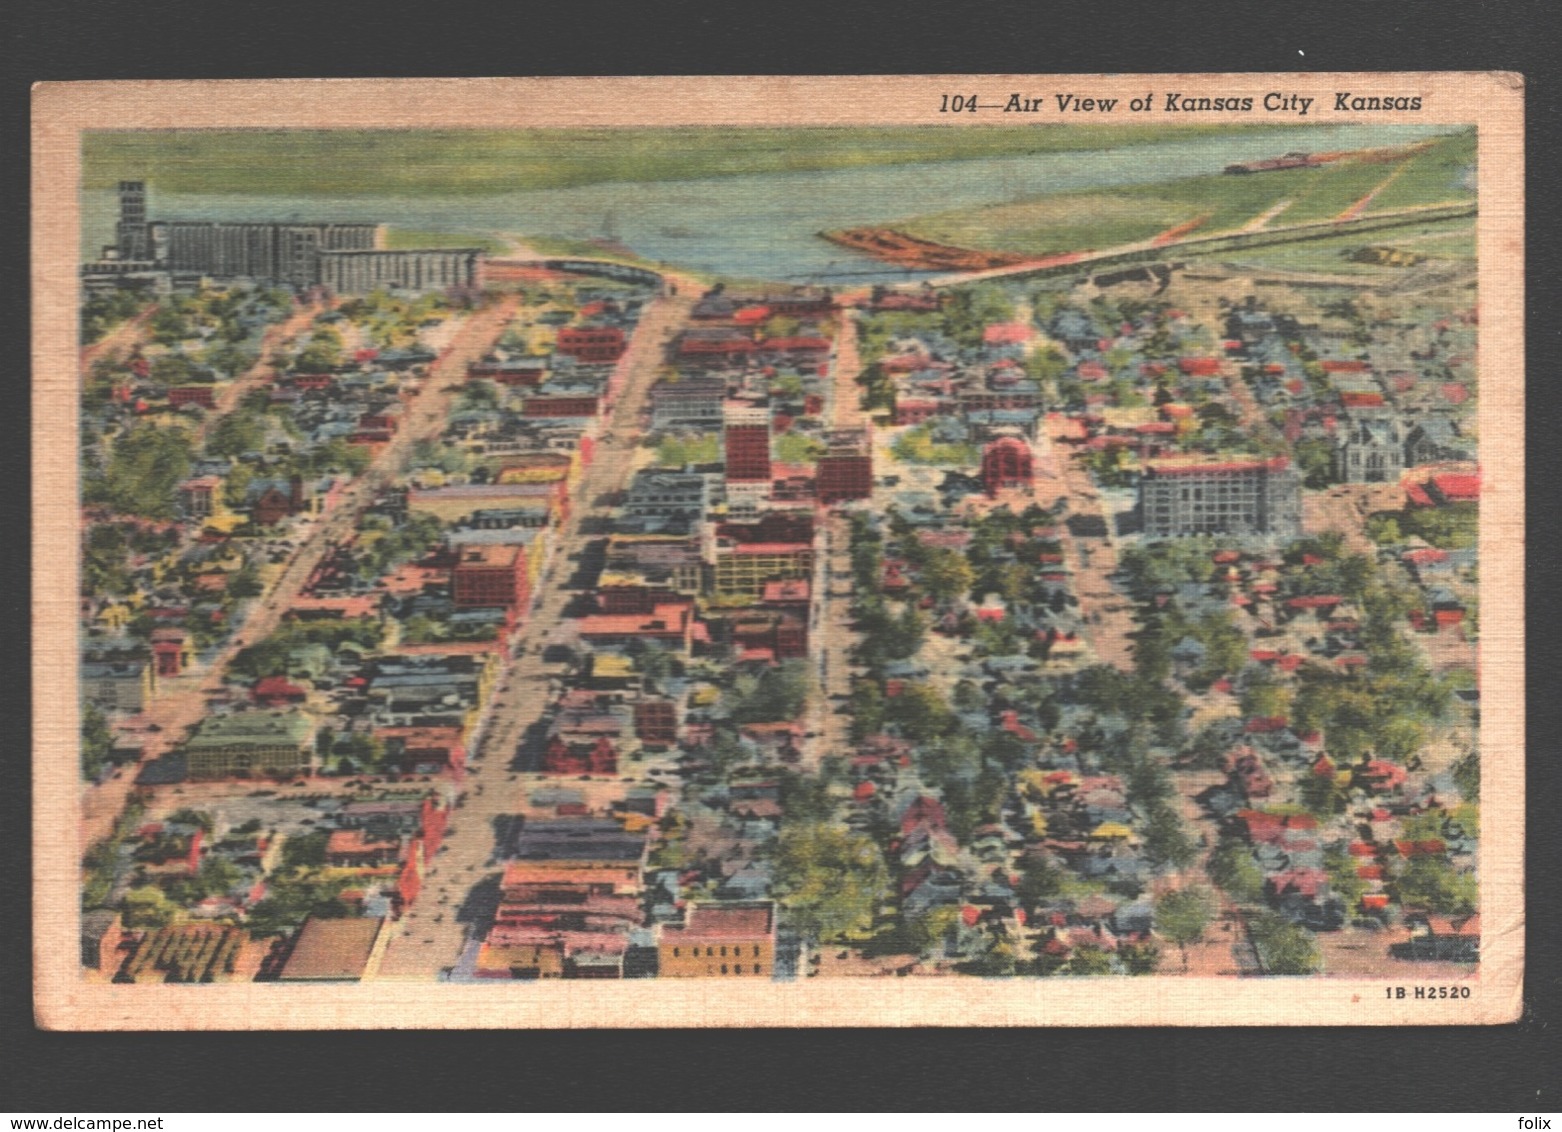 Kansas - Air View Of Kansas City - 1952 - Linen - Kansas City – Kansas